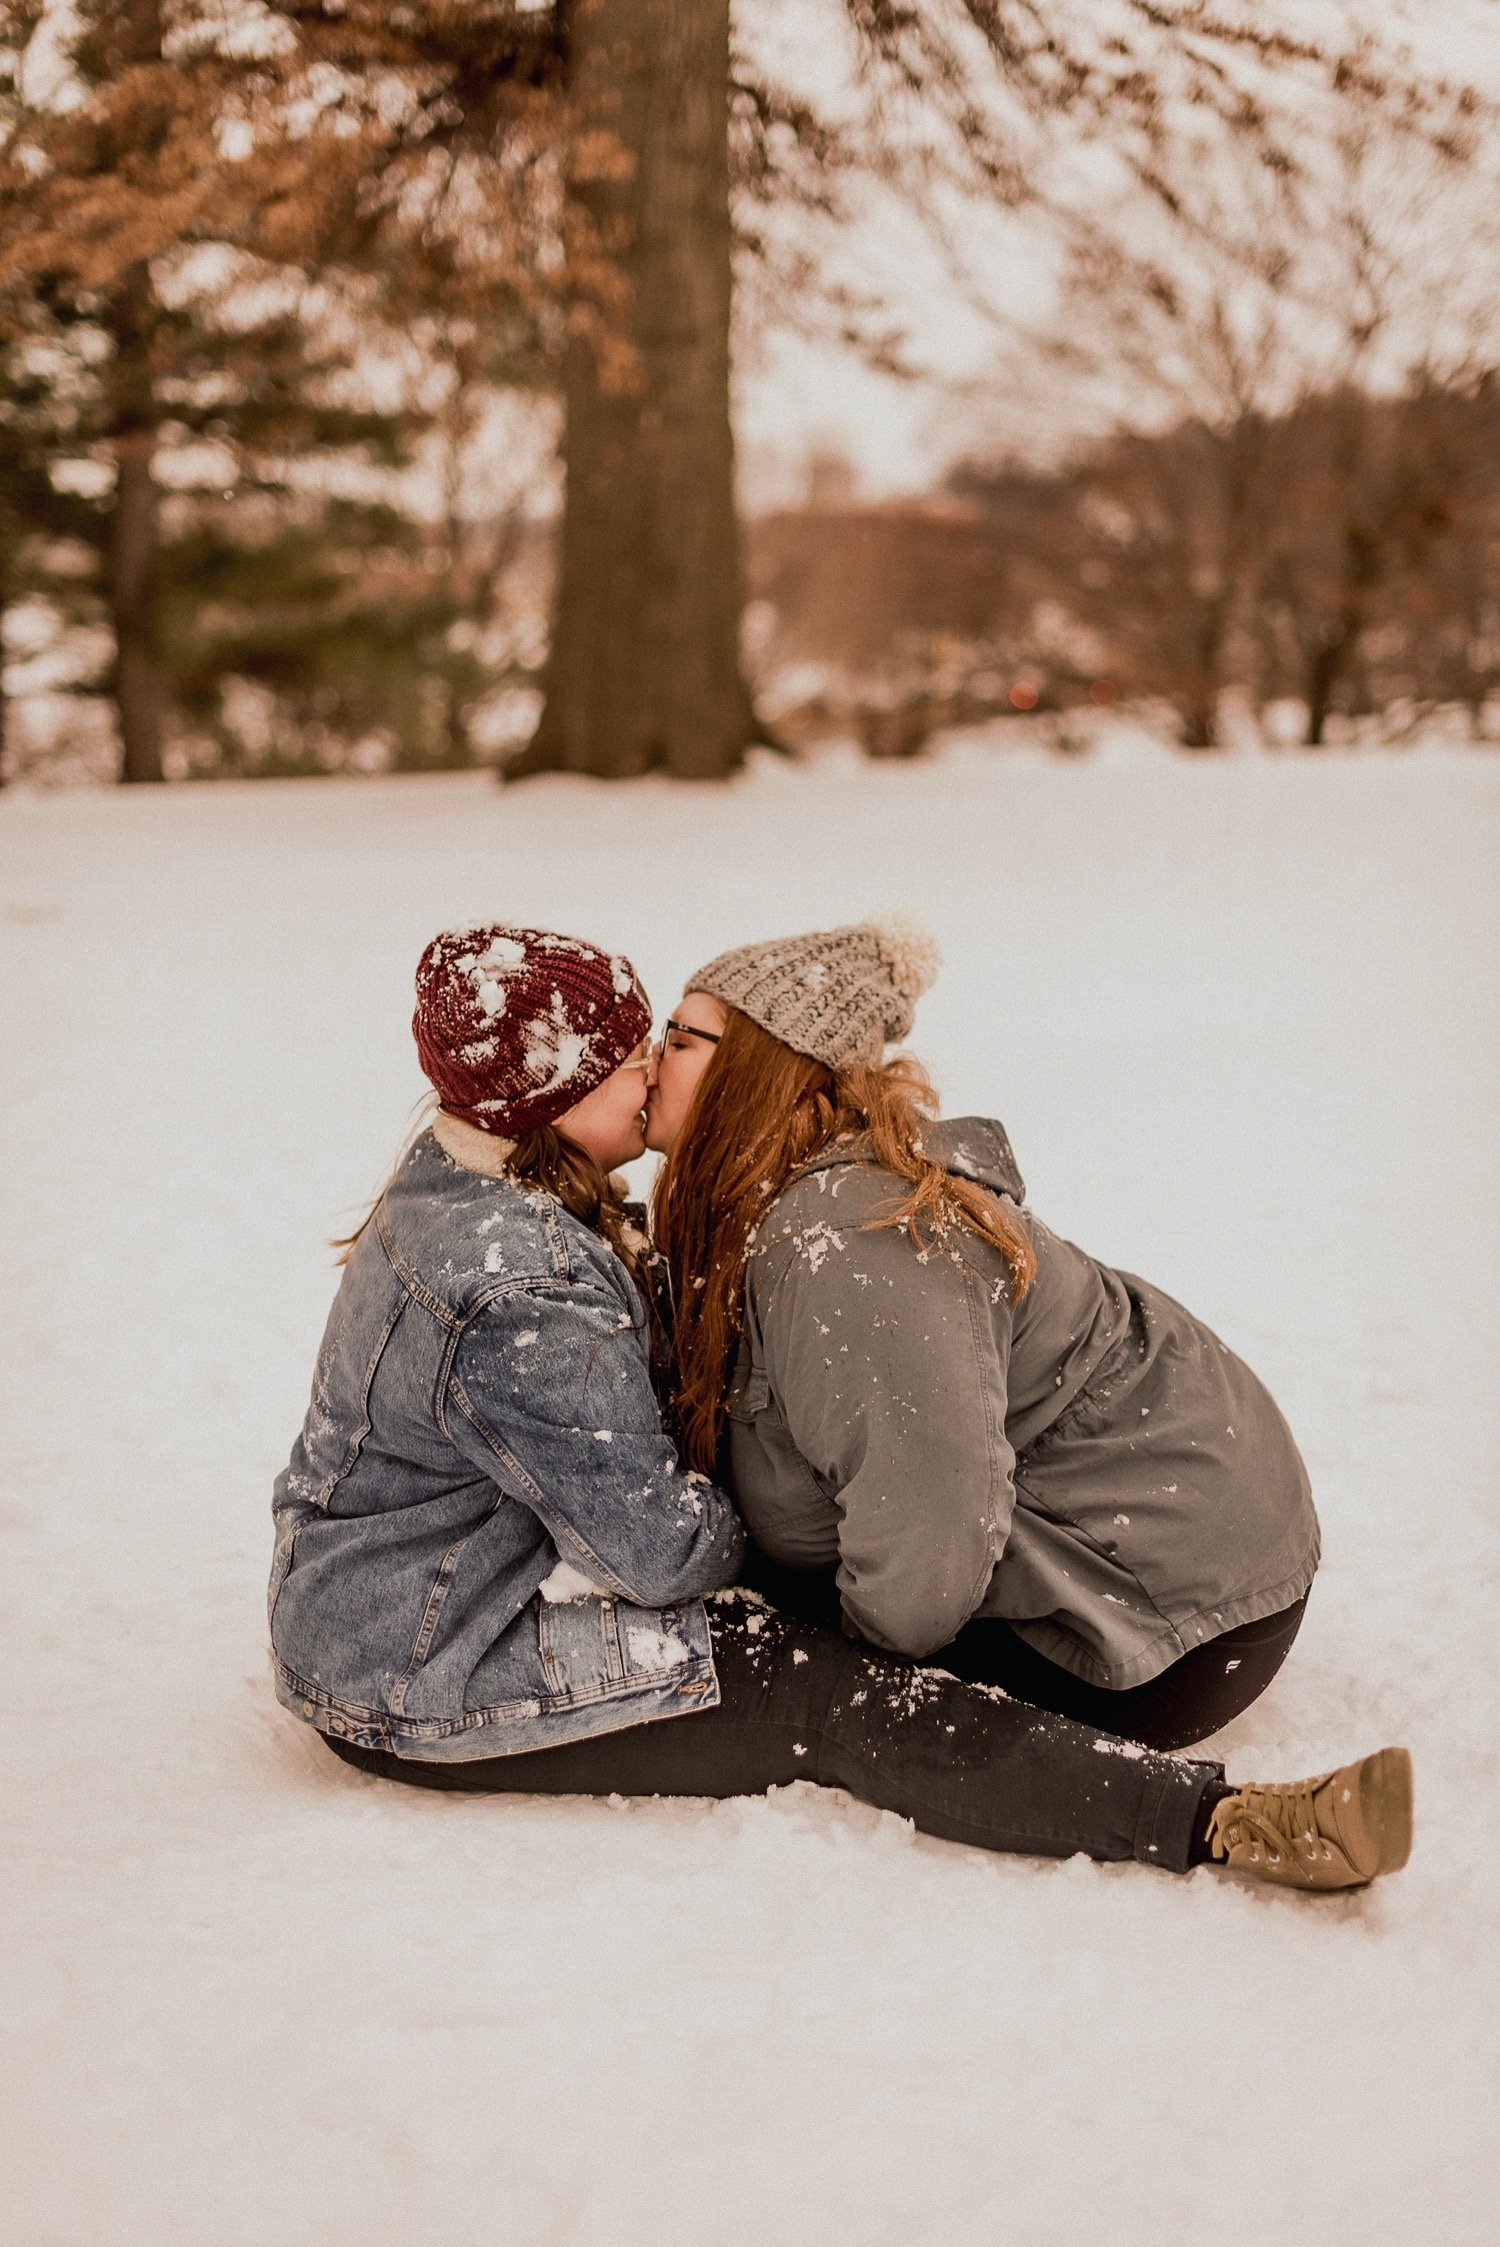 Couple-kiss-in-the-park-during-snowfall.jpg.jpg